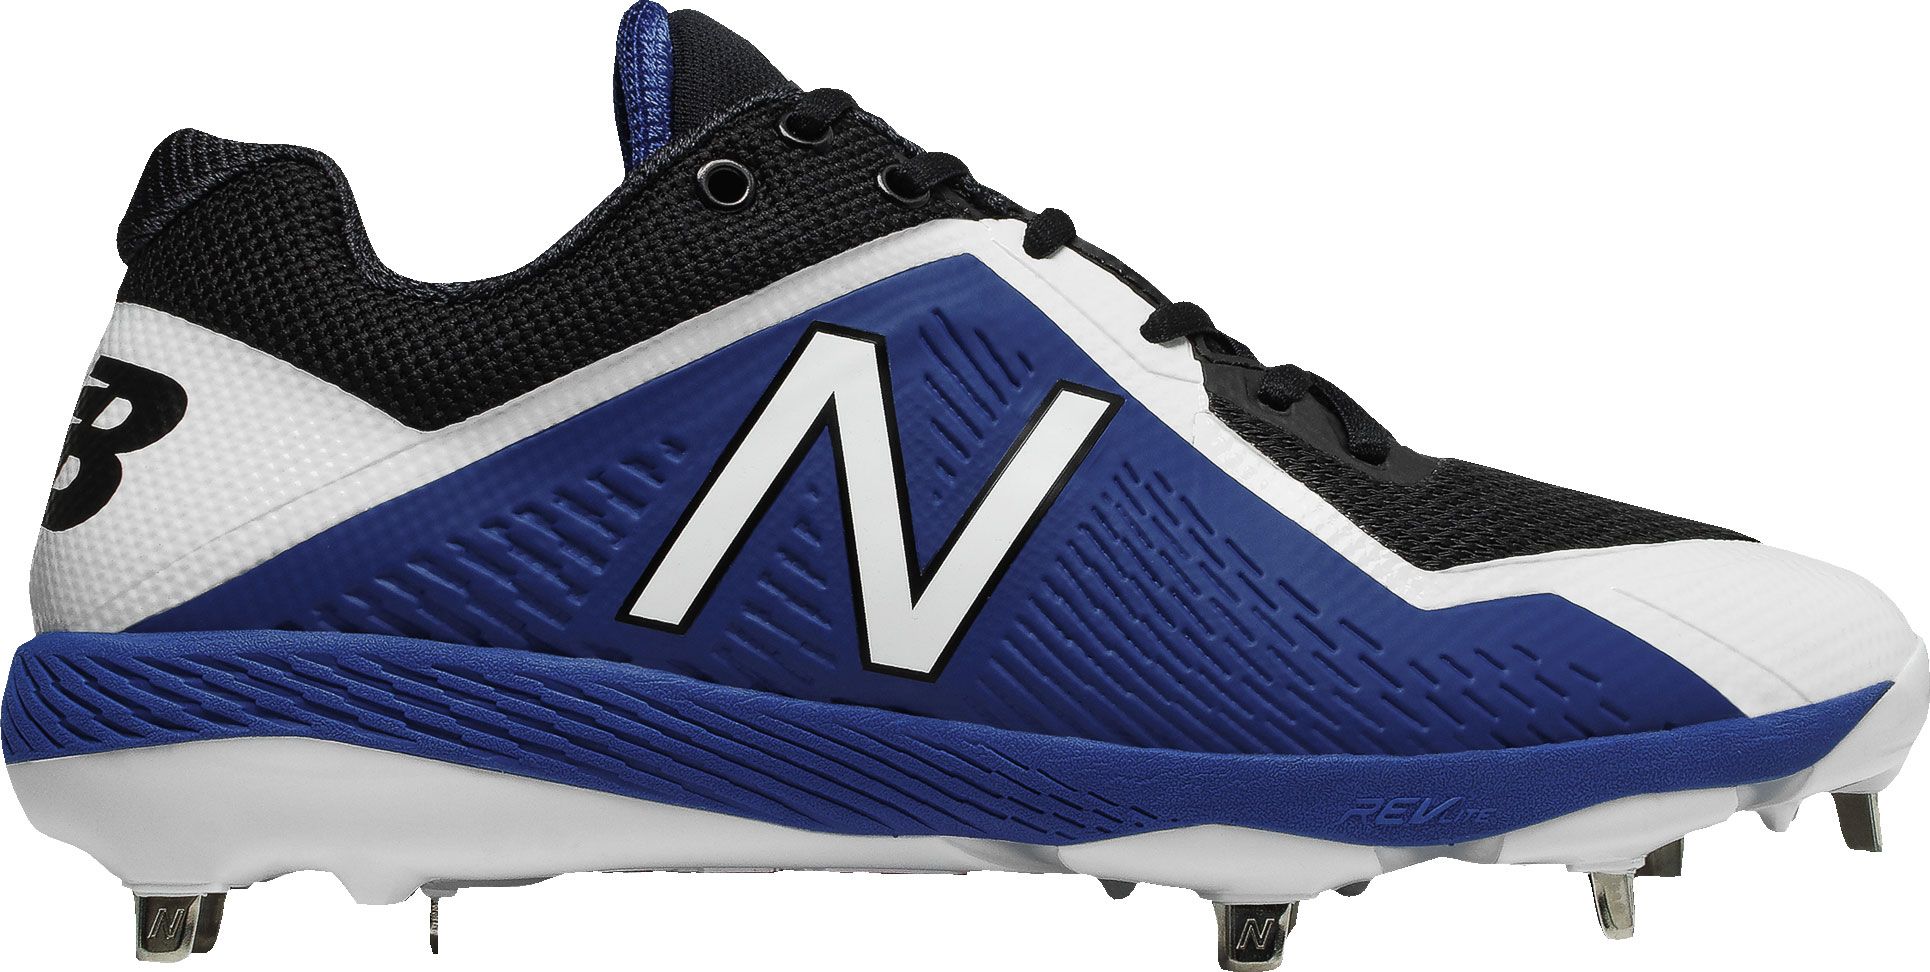 new balance men's l4040v4 metal baseball shoe